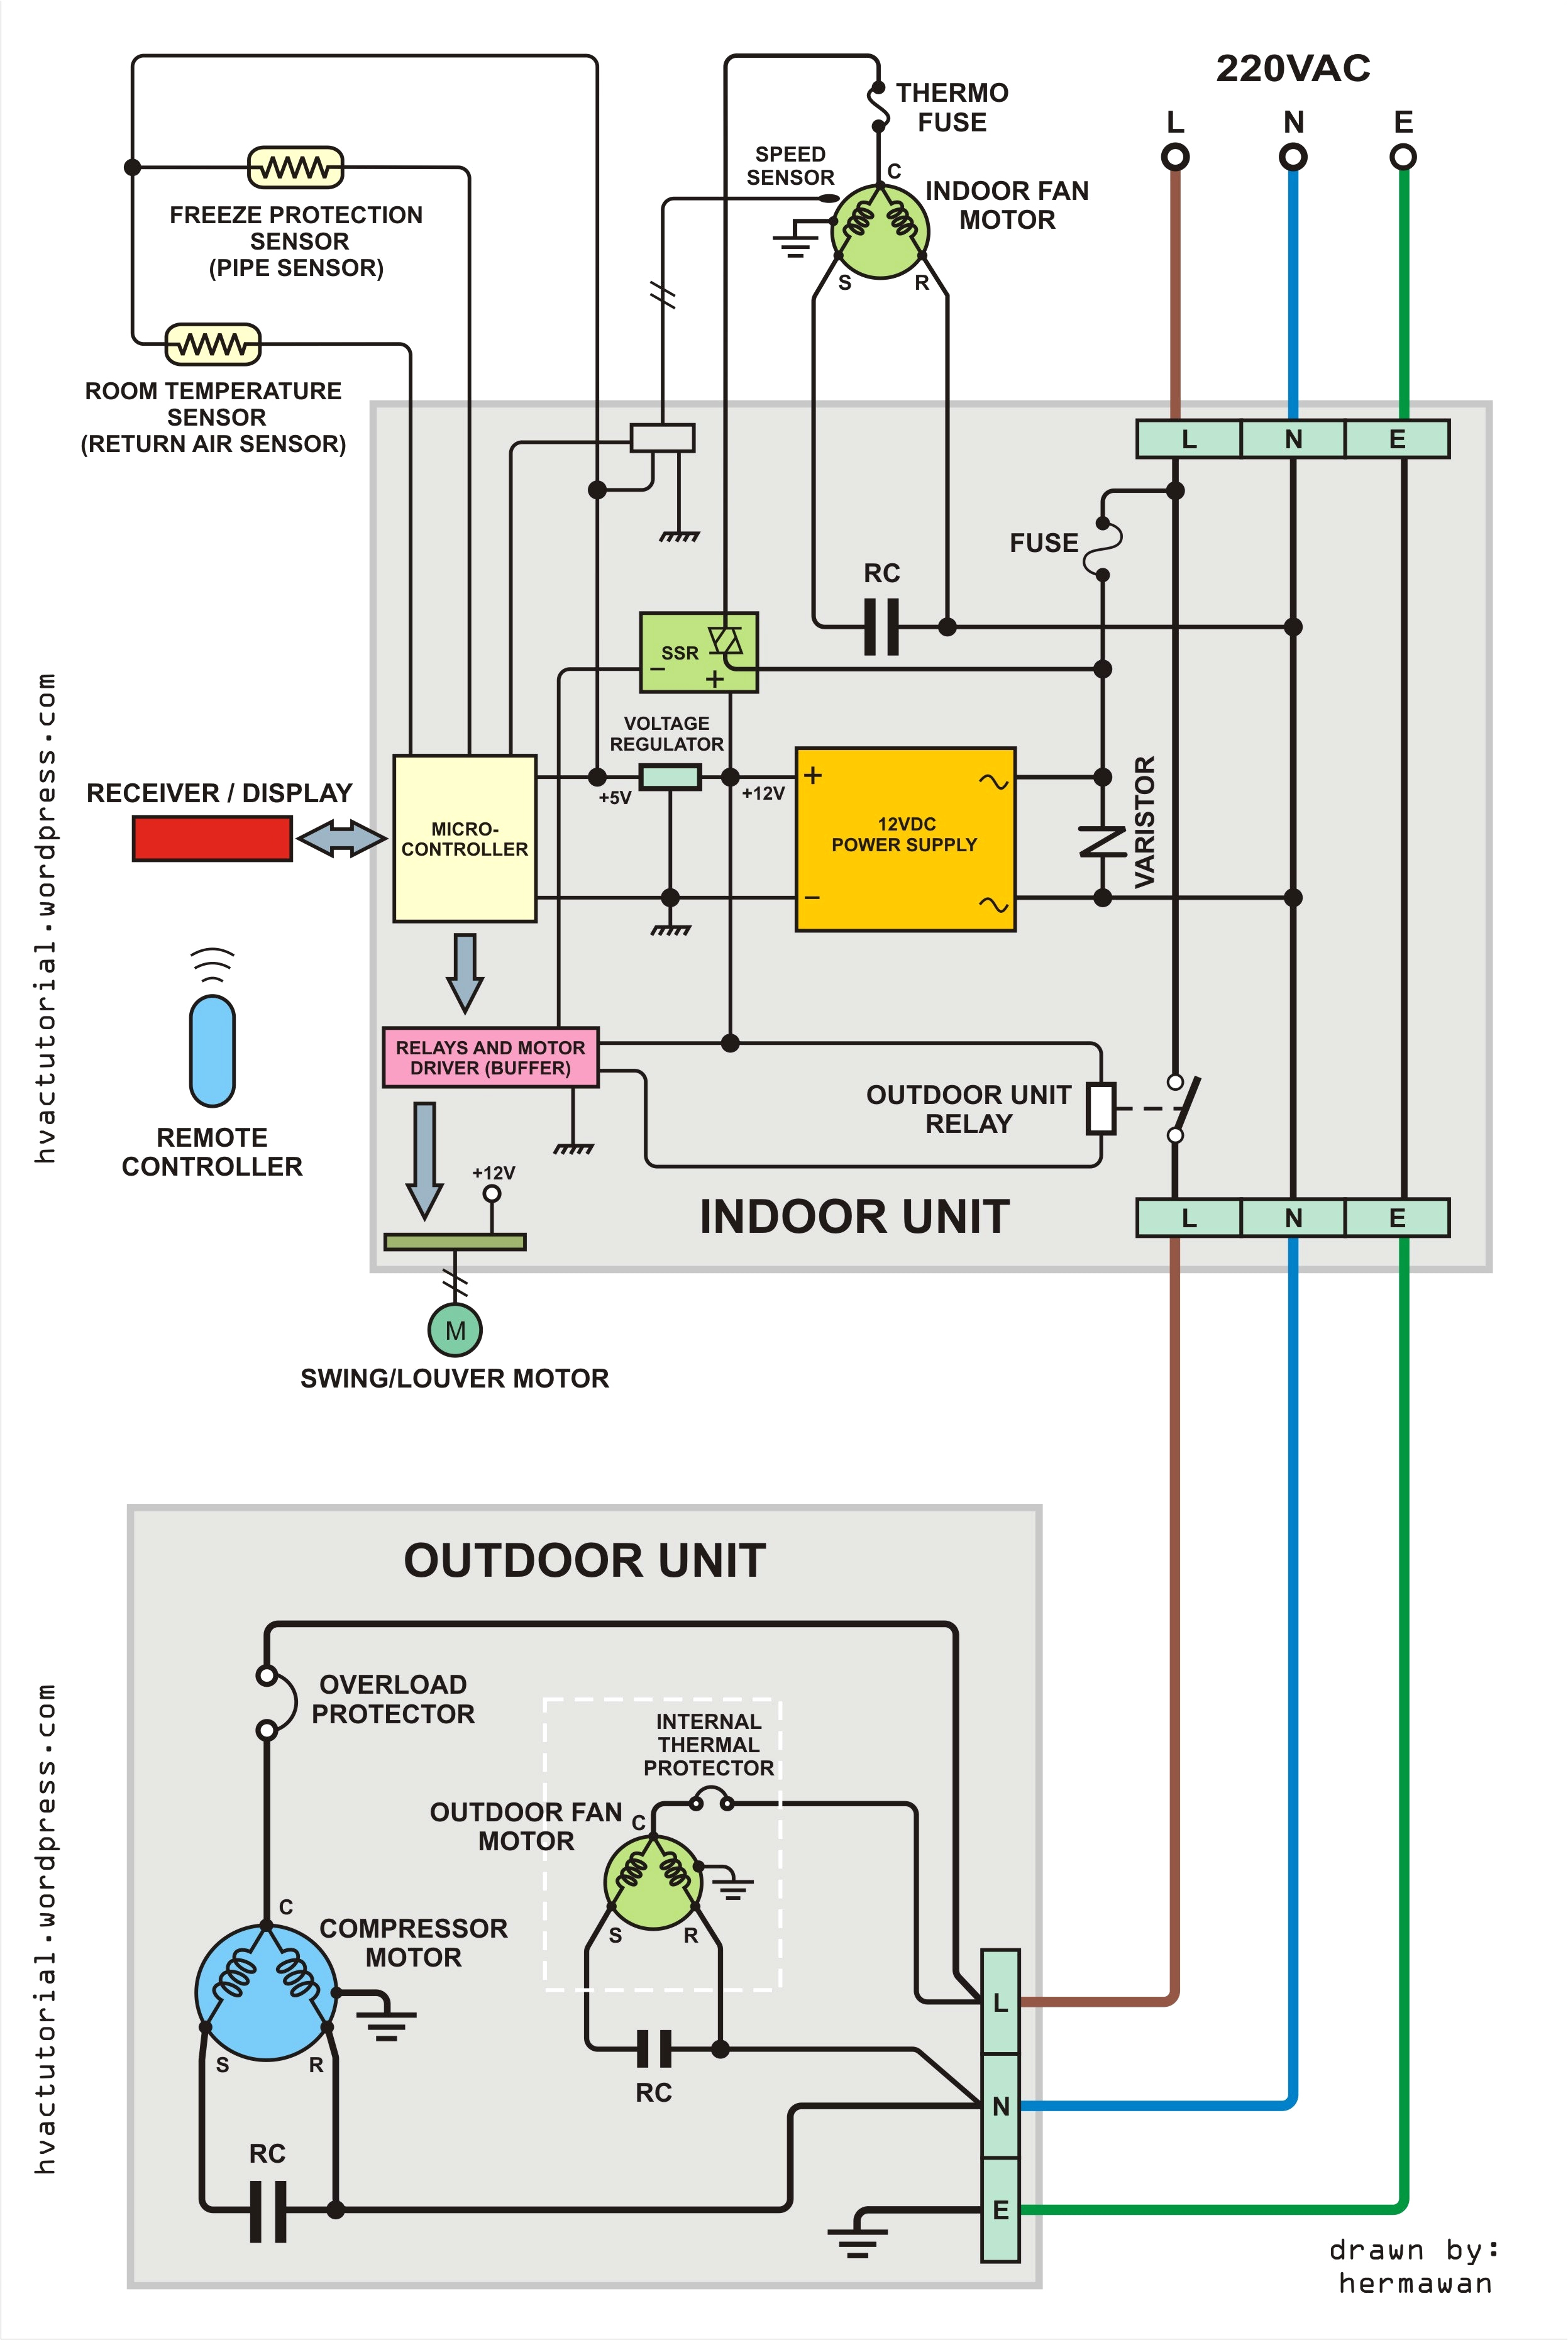 ruud wiring diagram schematic wiring diagram blogrudd ac wiring diagram wiring diagram ruud wiring diagram schematic